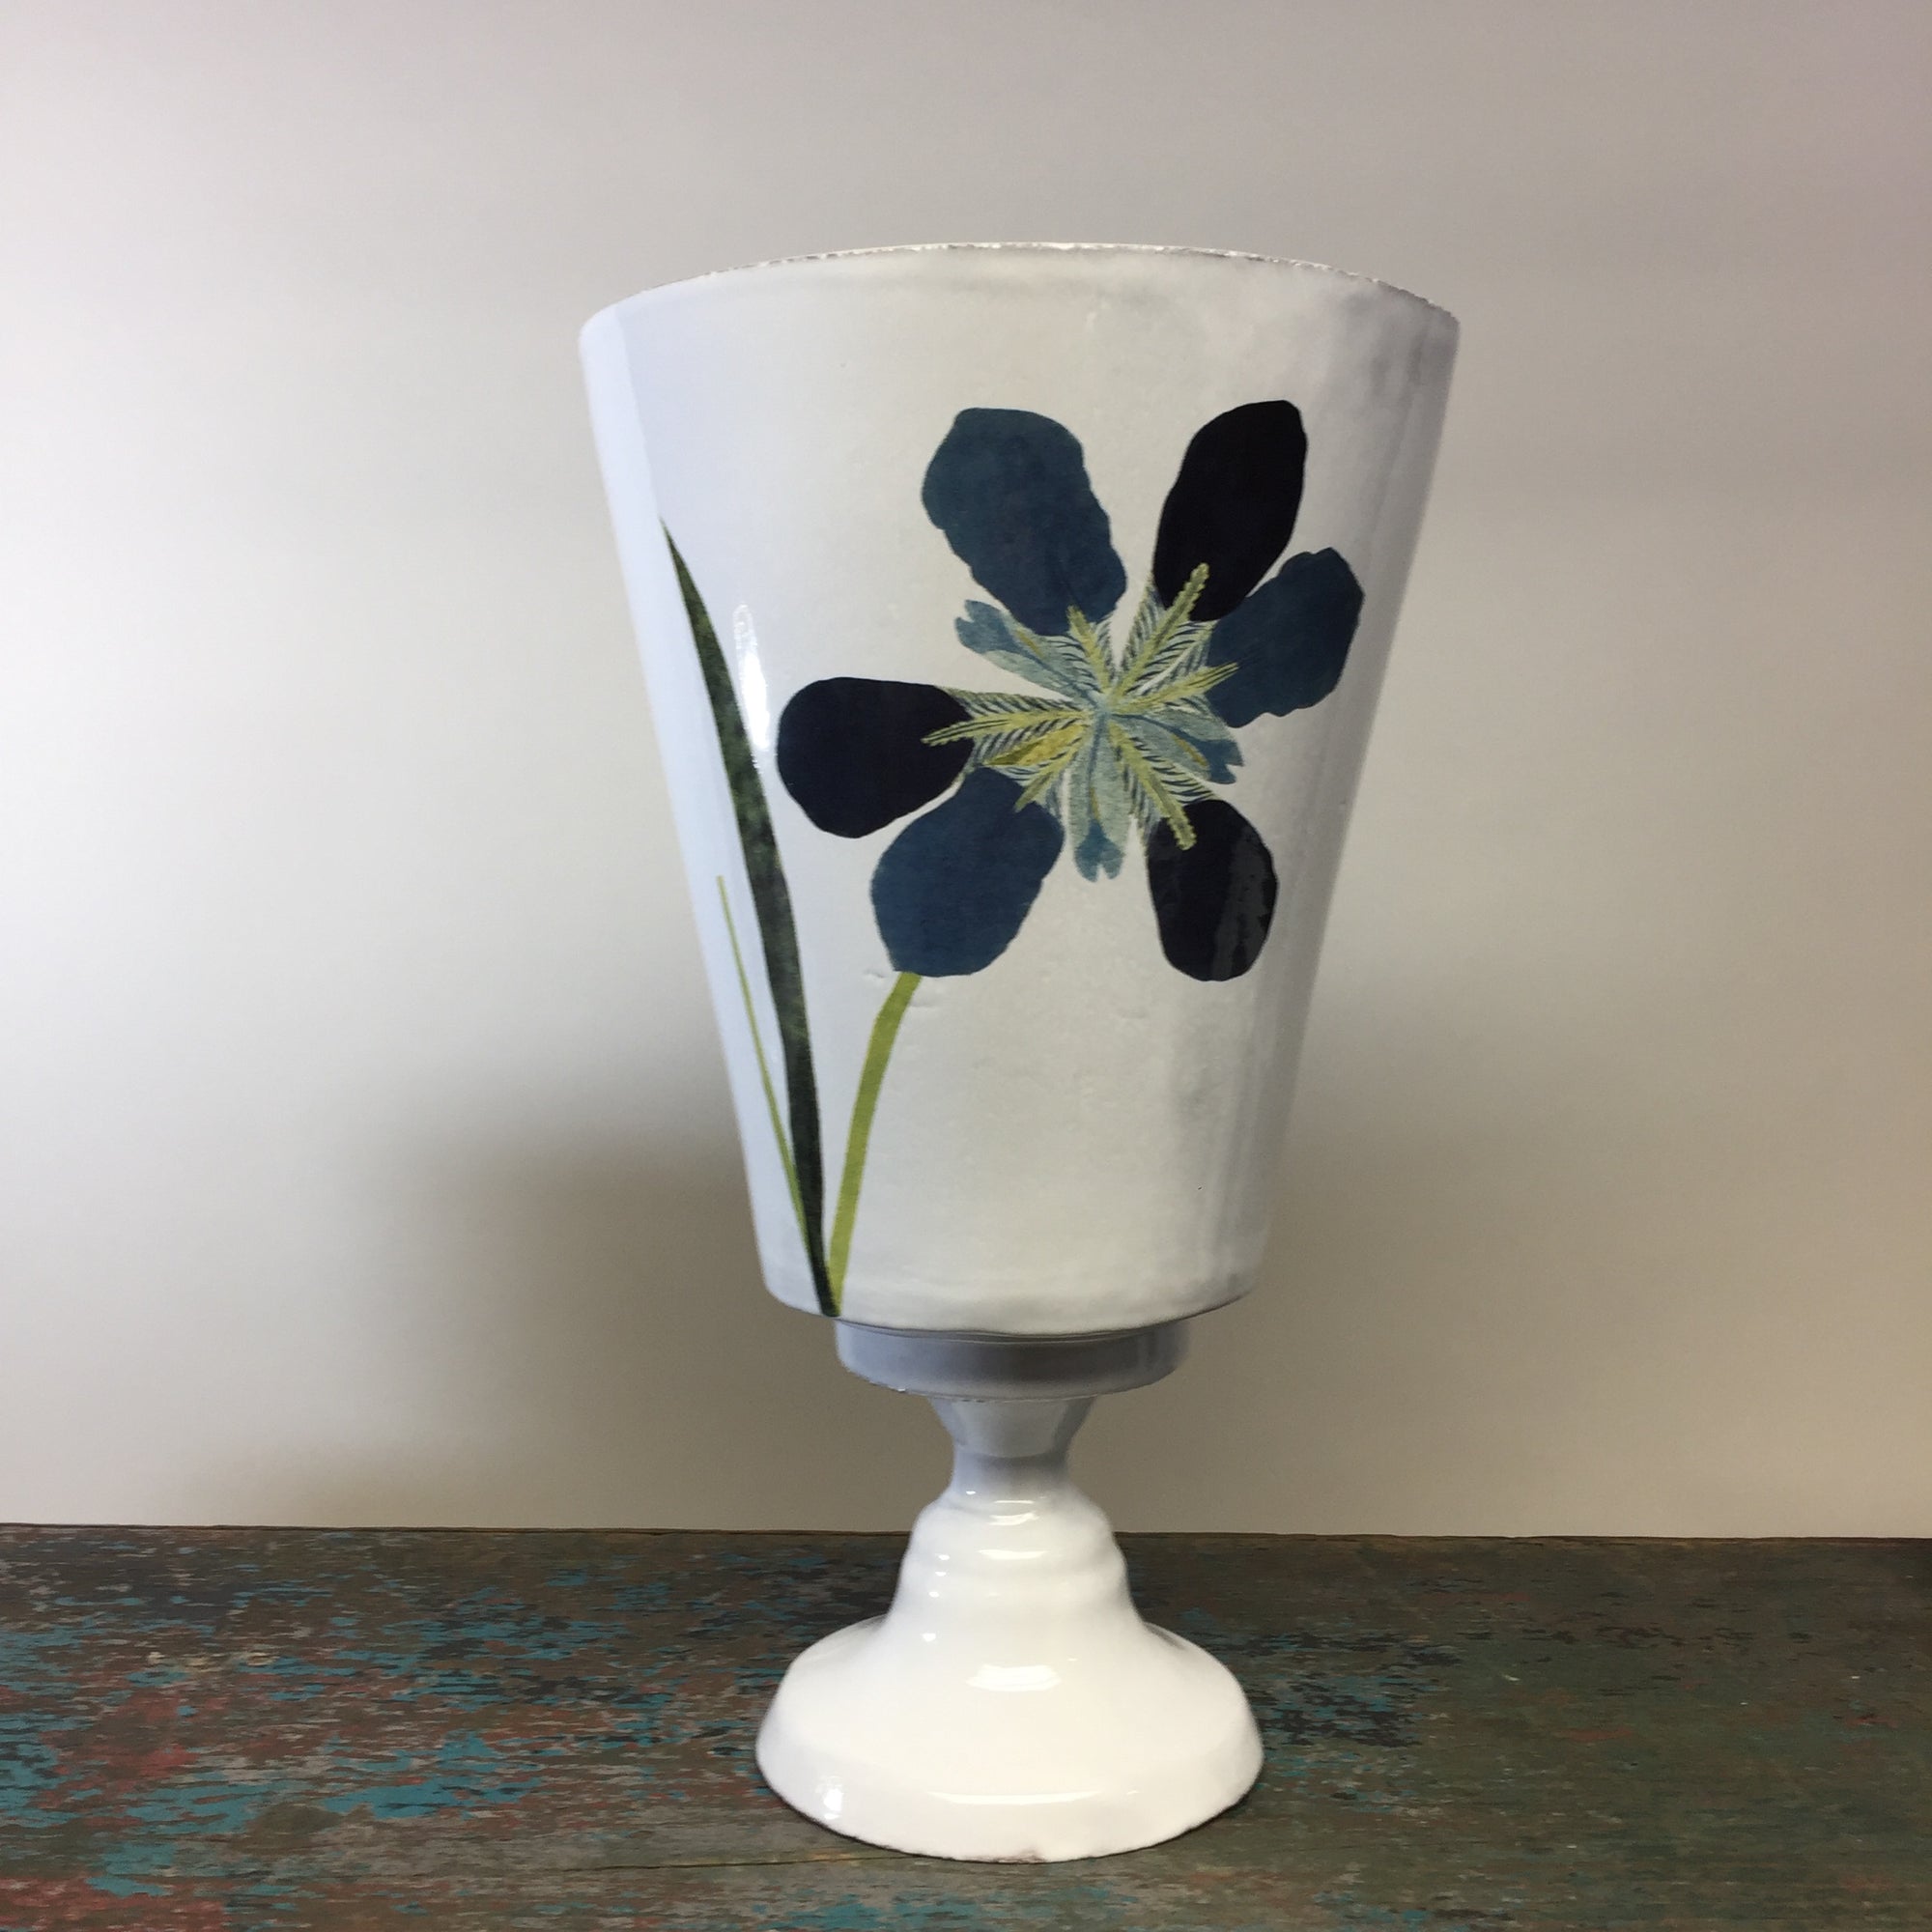 Astier de Villatte John Derian Blue Iris Vase